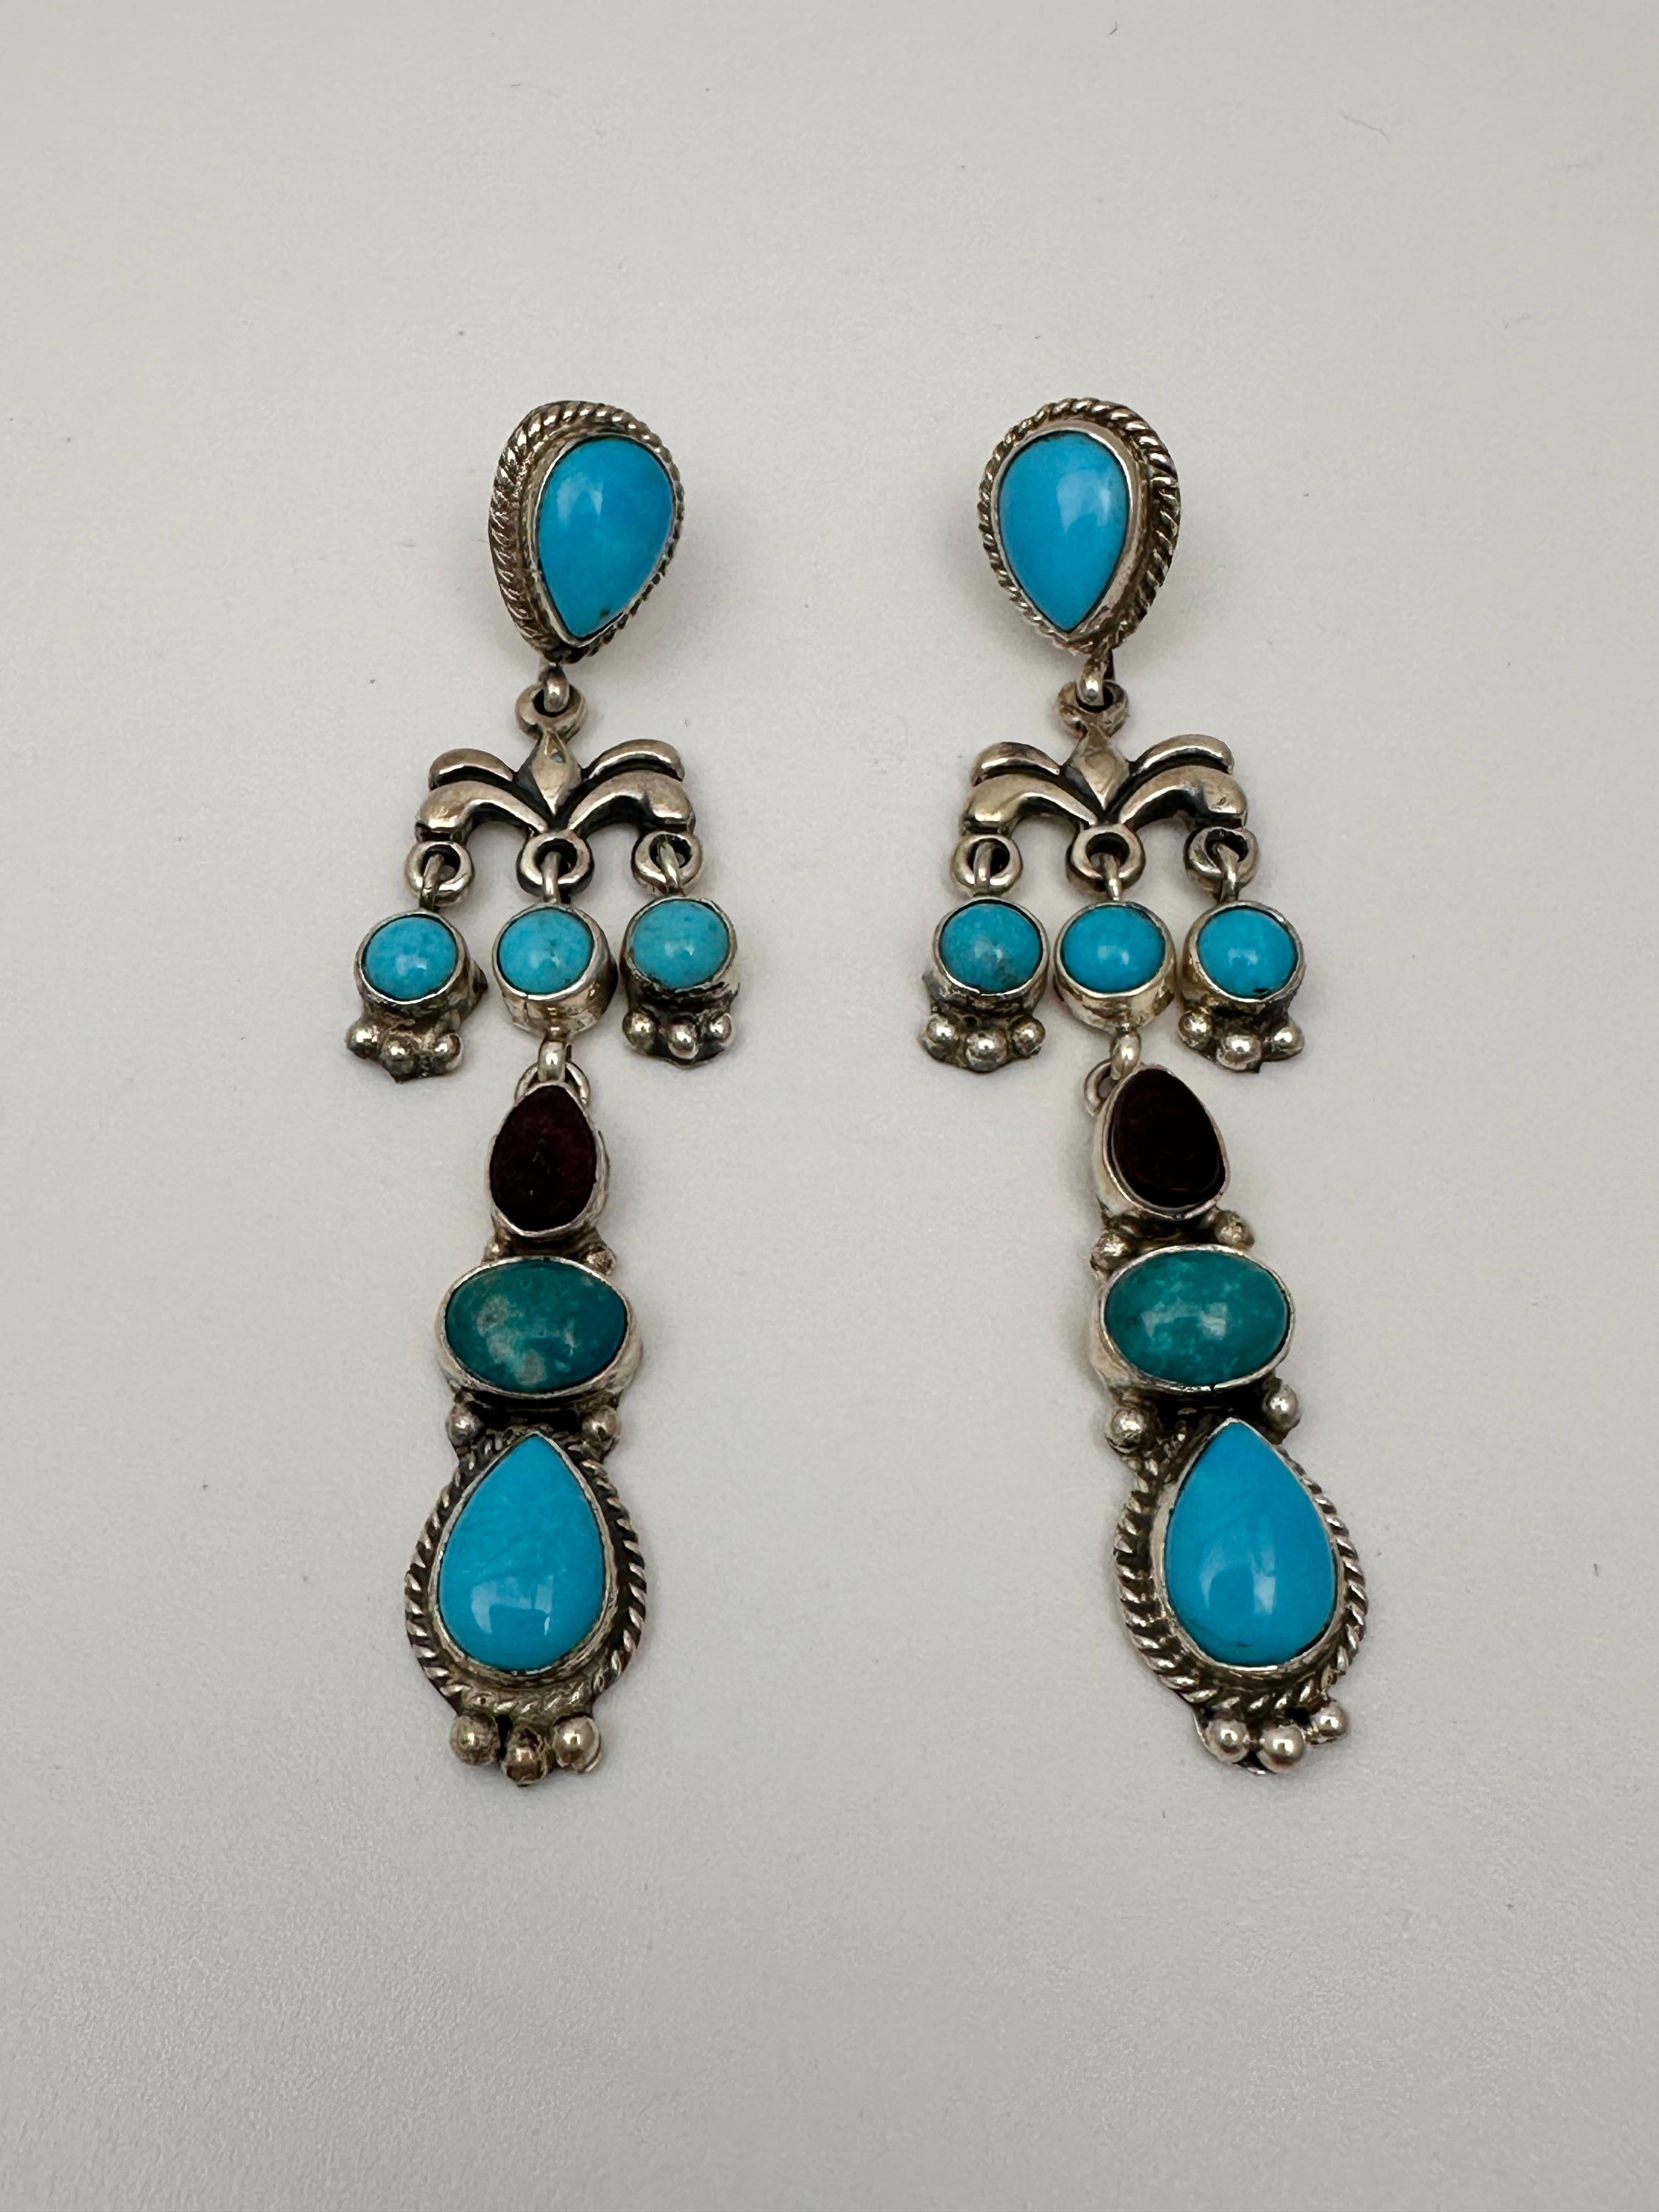 Navajo Artist Fajitas Sterling Silver .925 Turquoise Sugilite Dangle Earrings 
measures approx. 3/4